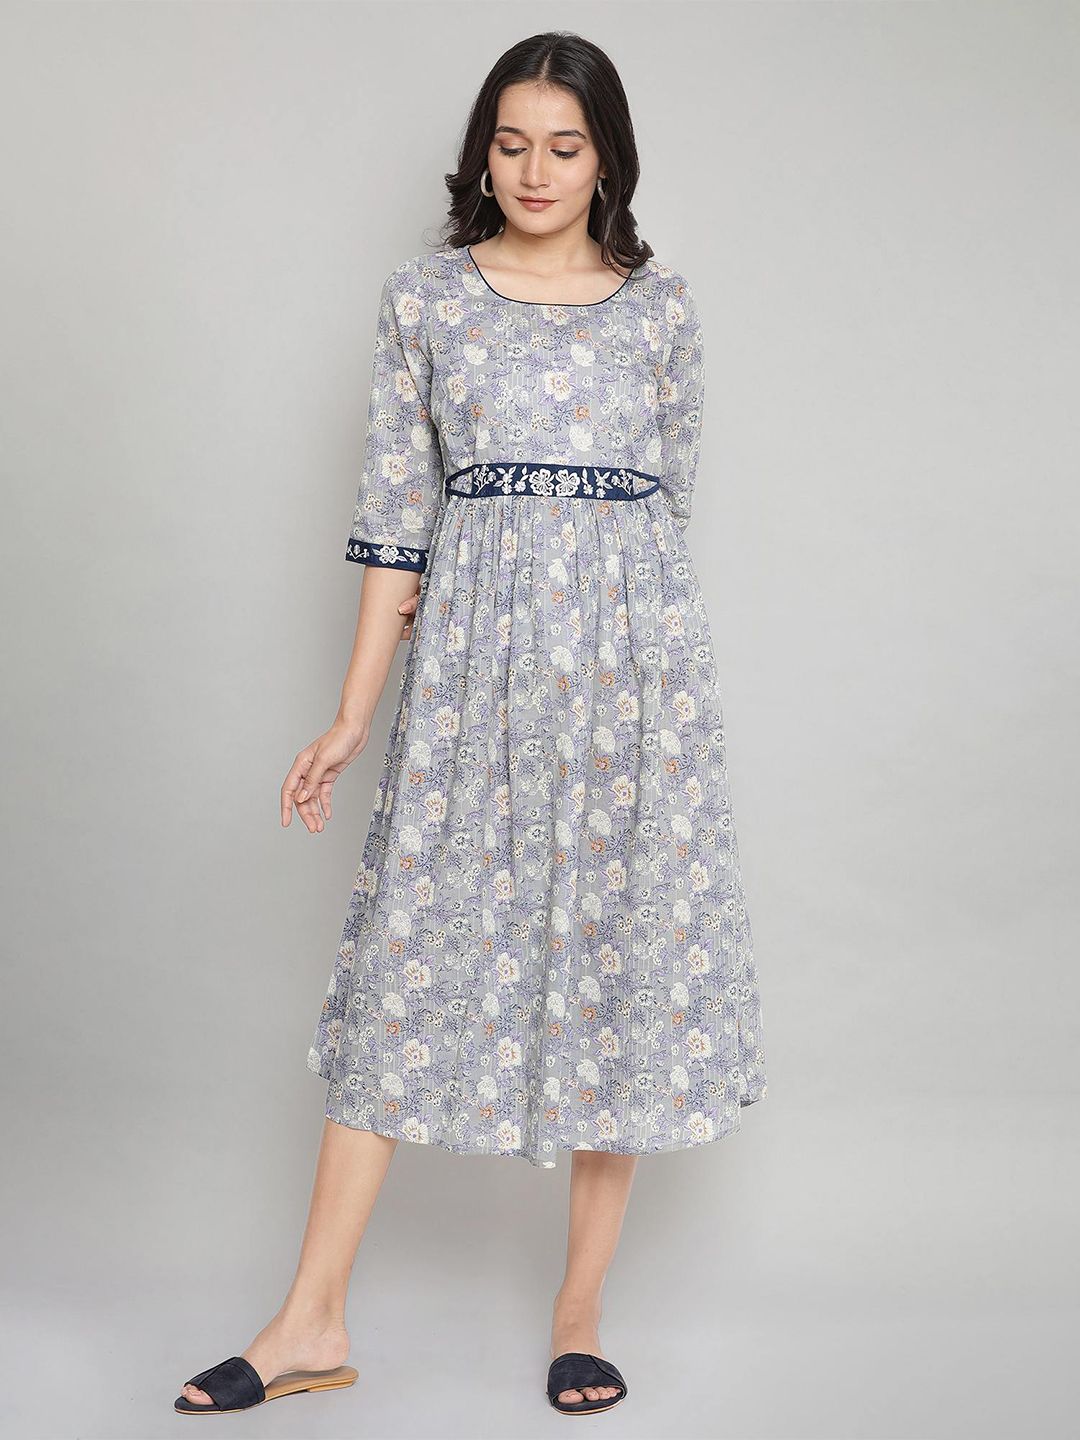 AURELIA Grey Floral Printed Midi Pure Cotton Dress Price in India